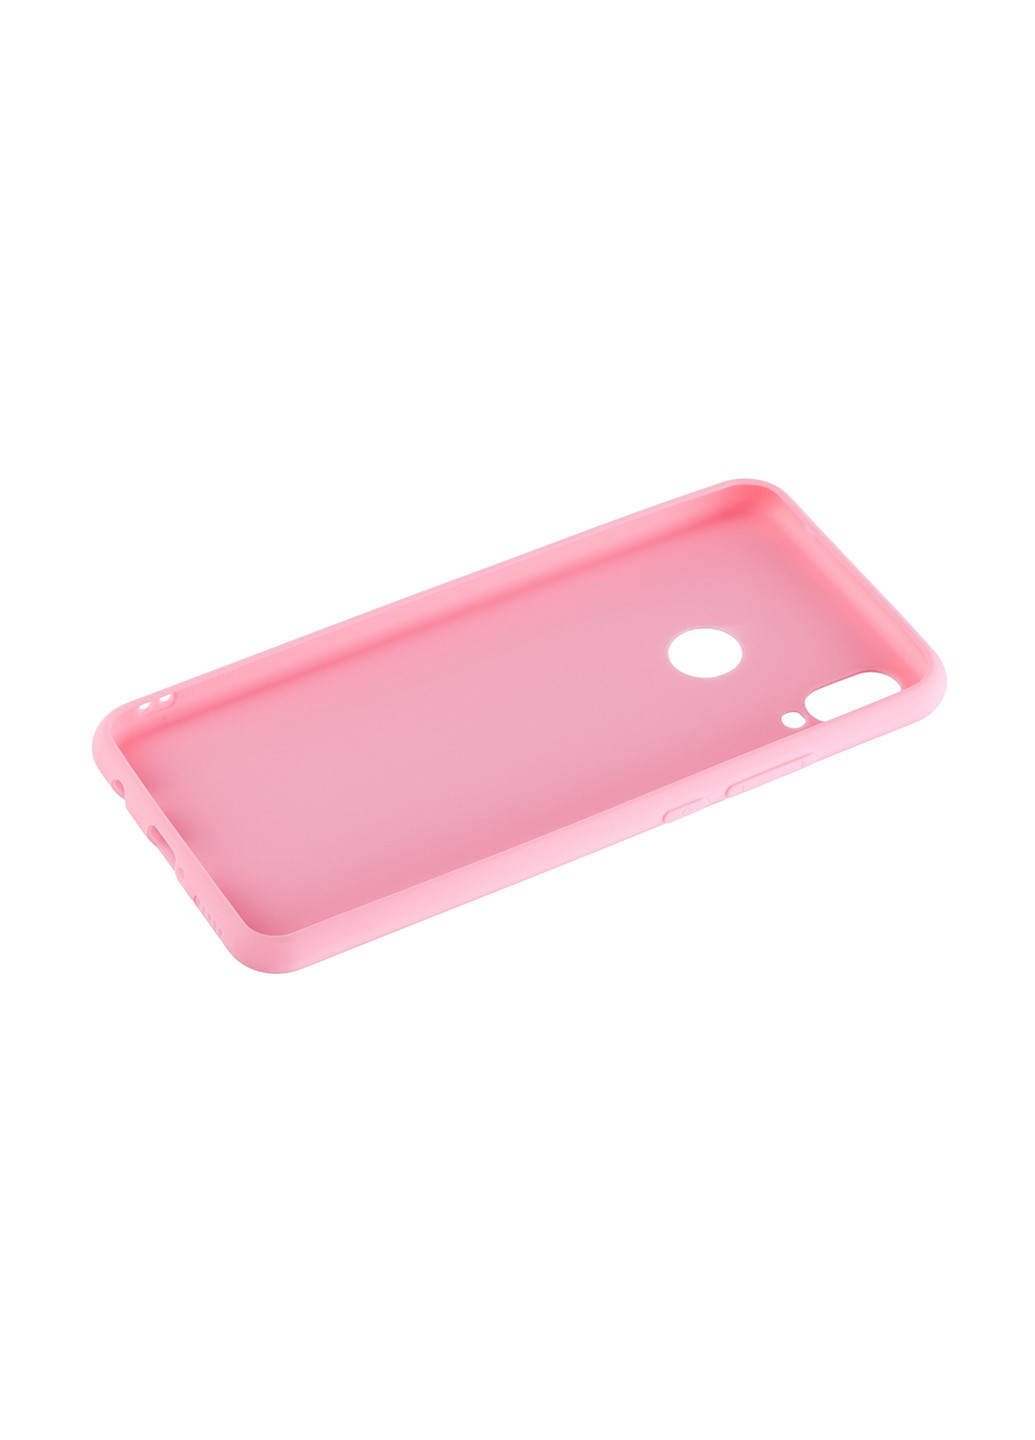 Чехол Basic 2E для Huawei P Smart+, Soft touch, Pink розовый